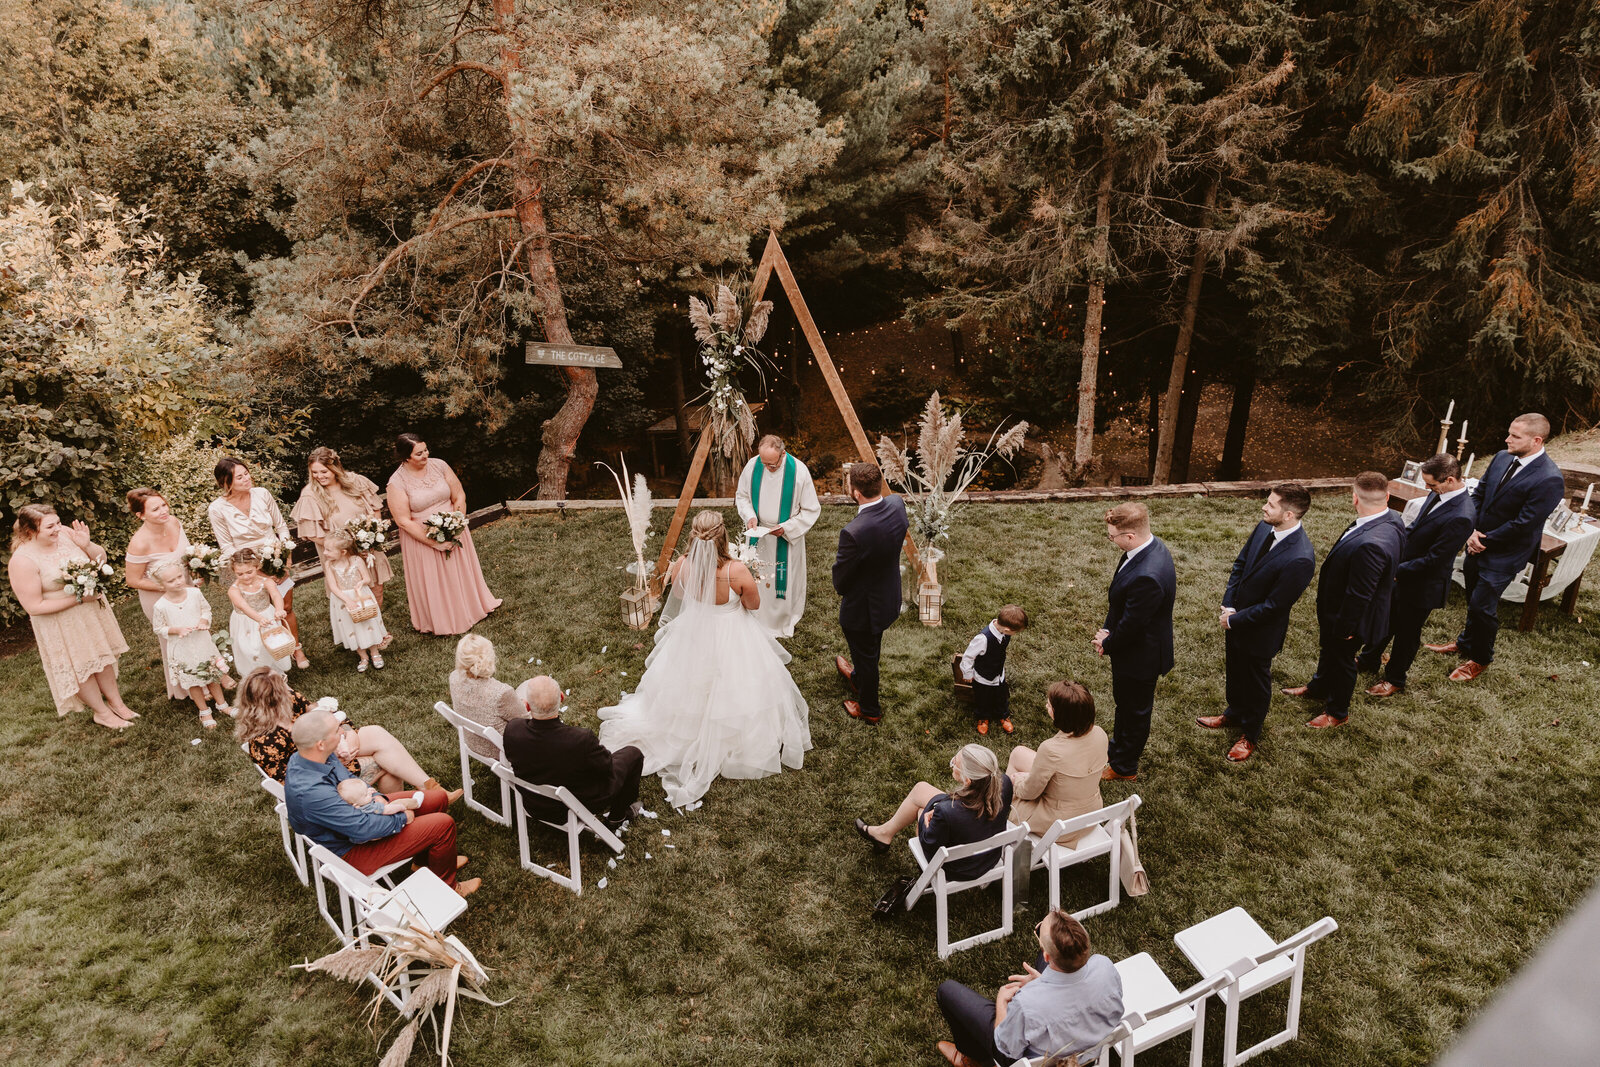 the most beautiful porthope backyard wedding photographed by mary zita payne photography